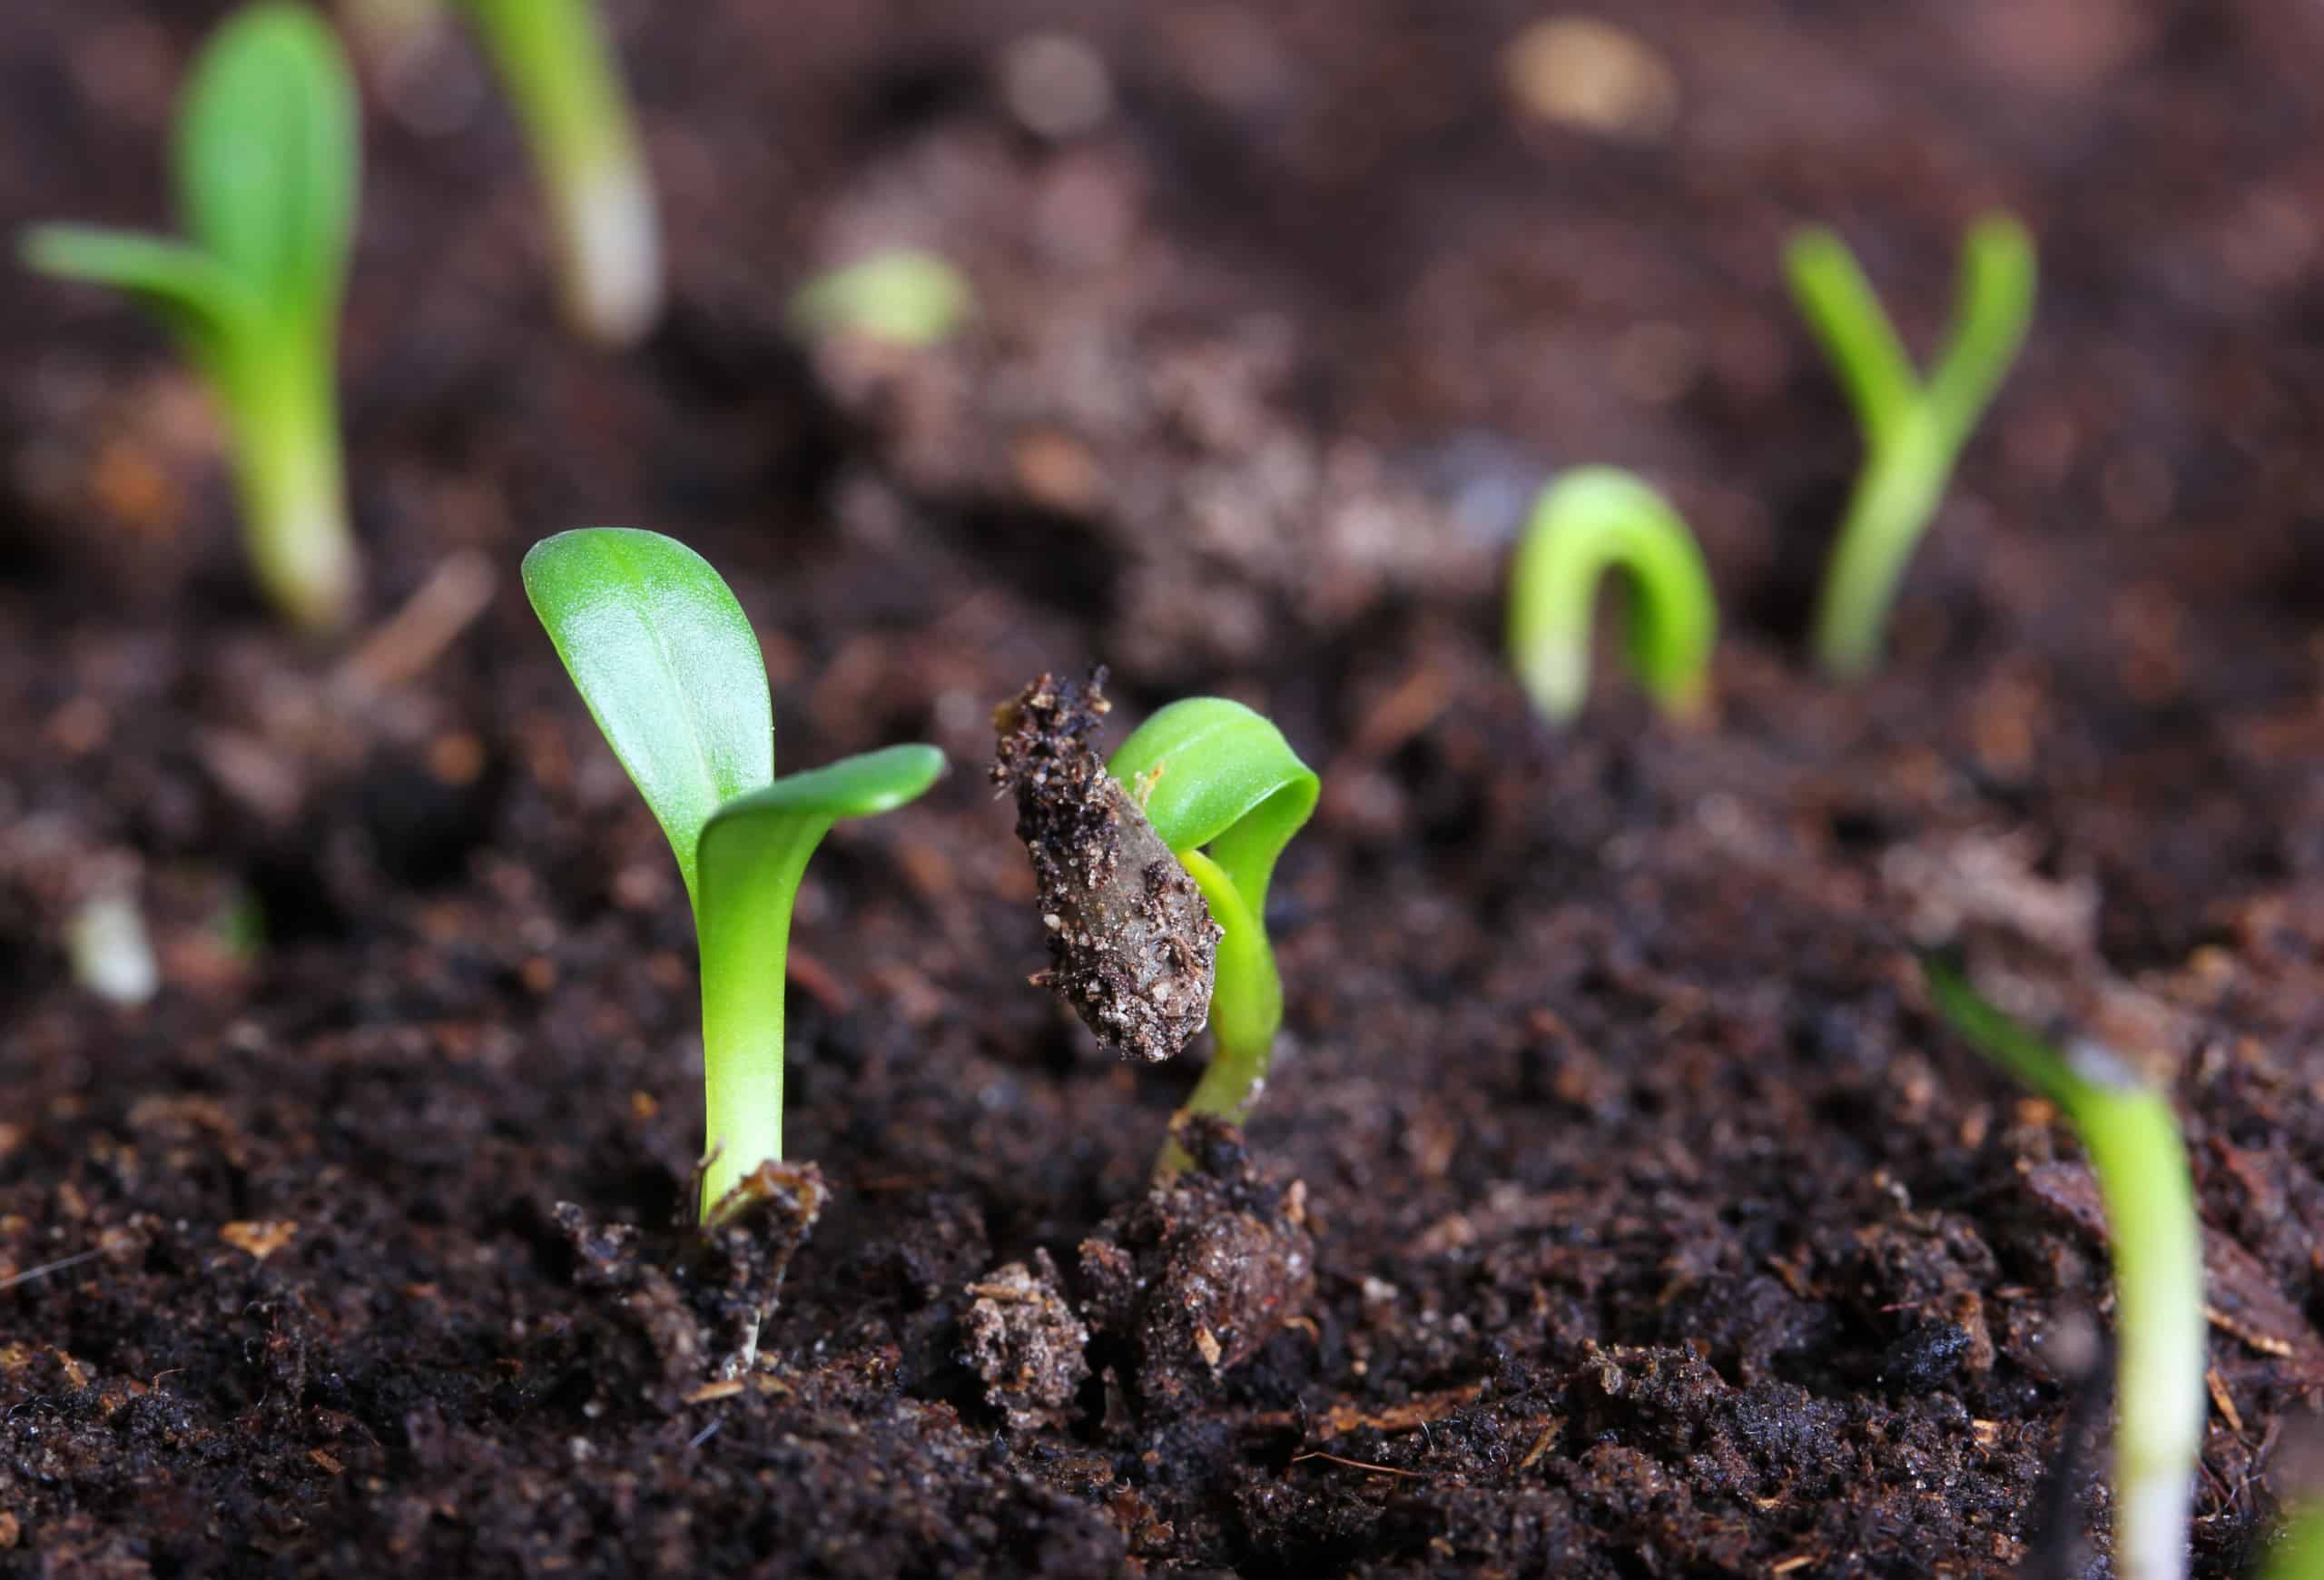 Organic farming helps build better soil